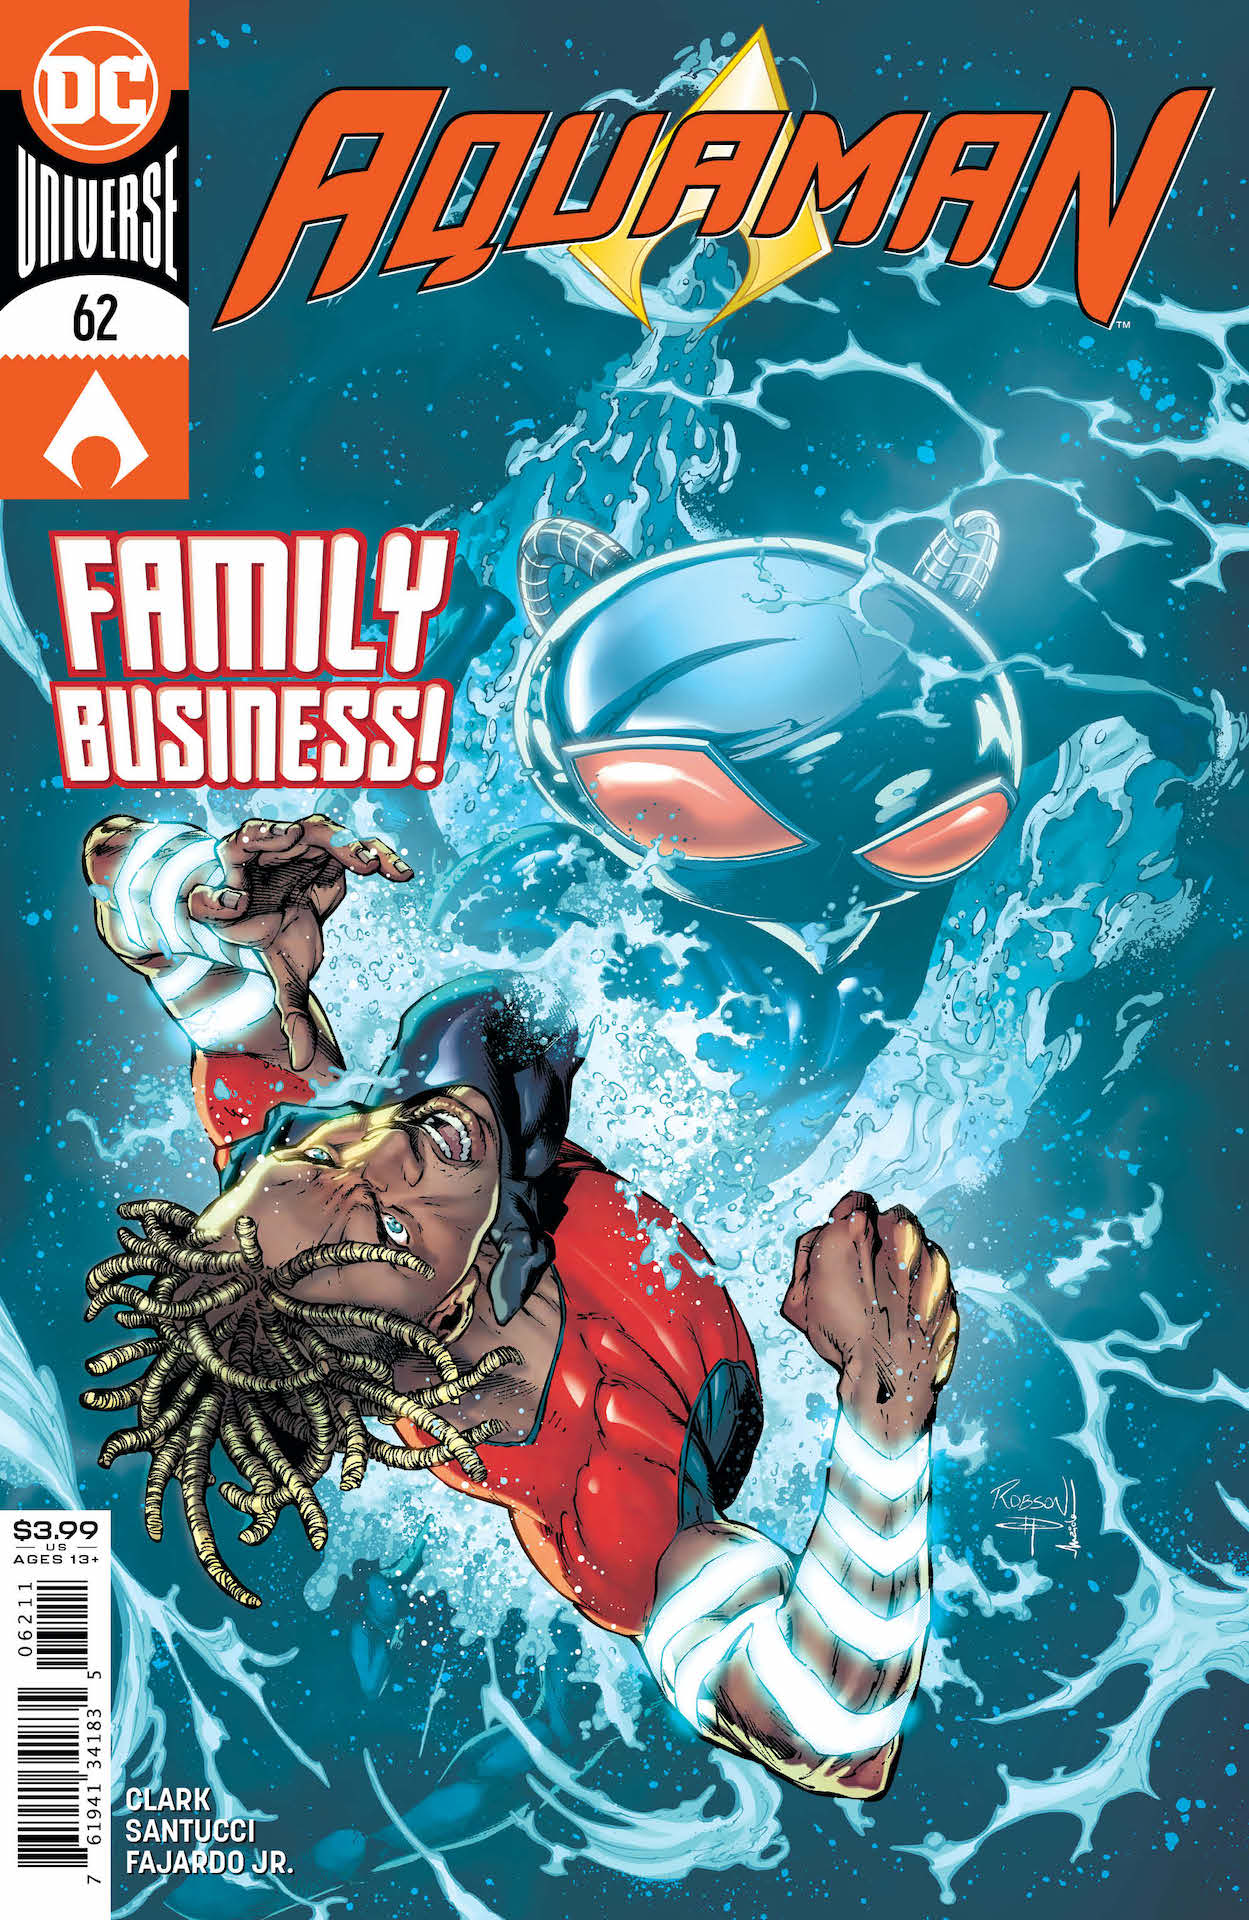 DC Preview: Aquaman #62